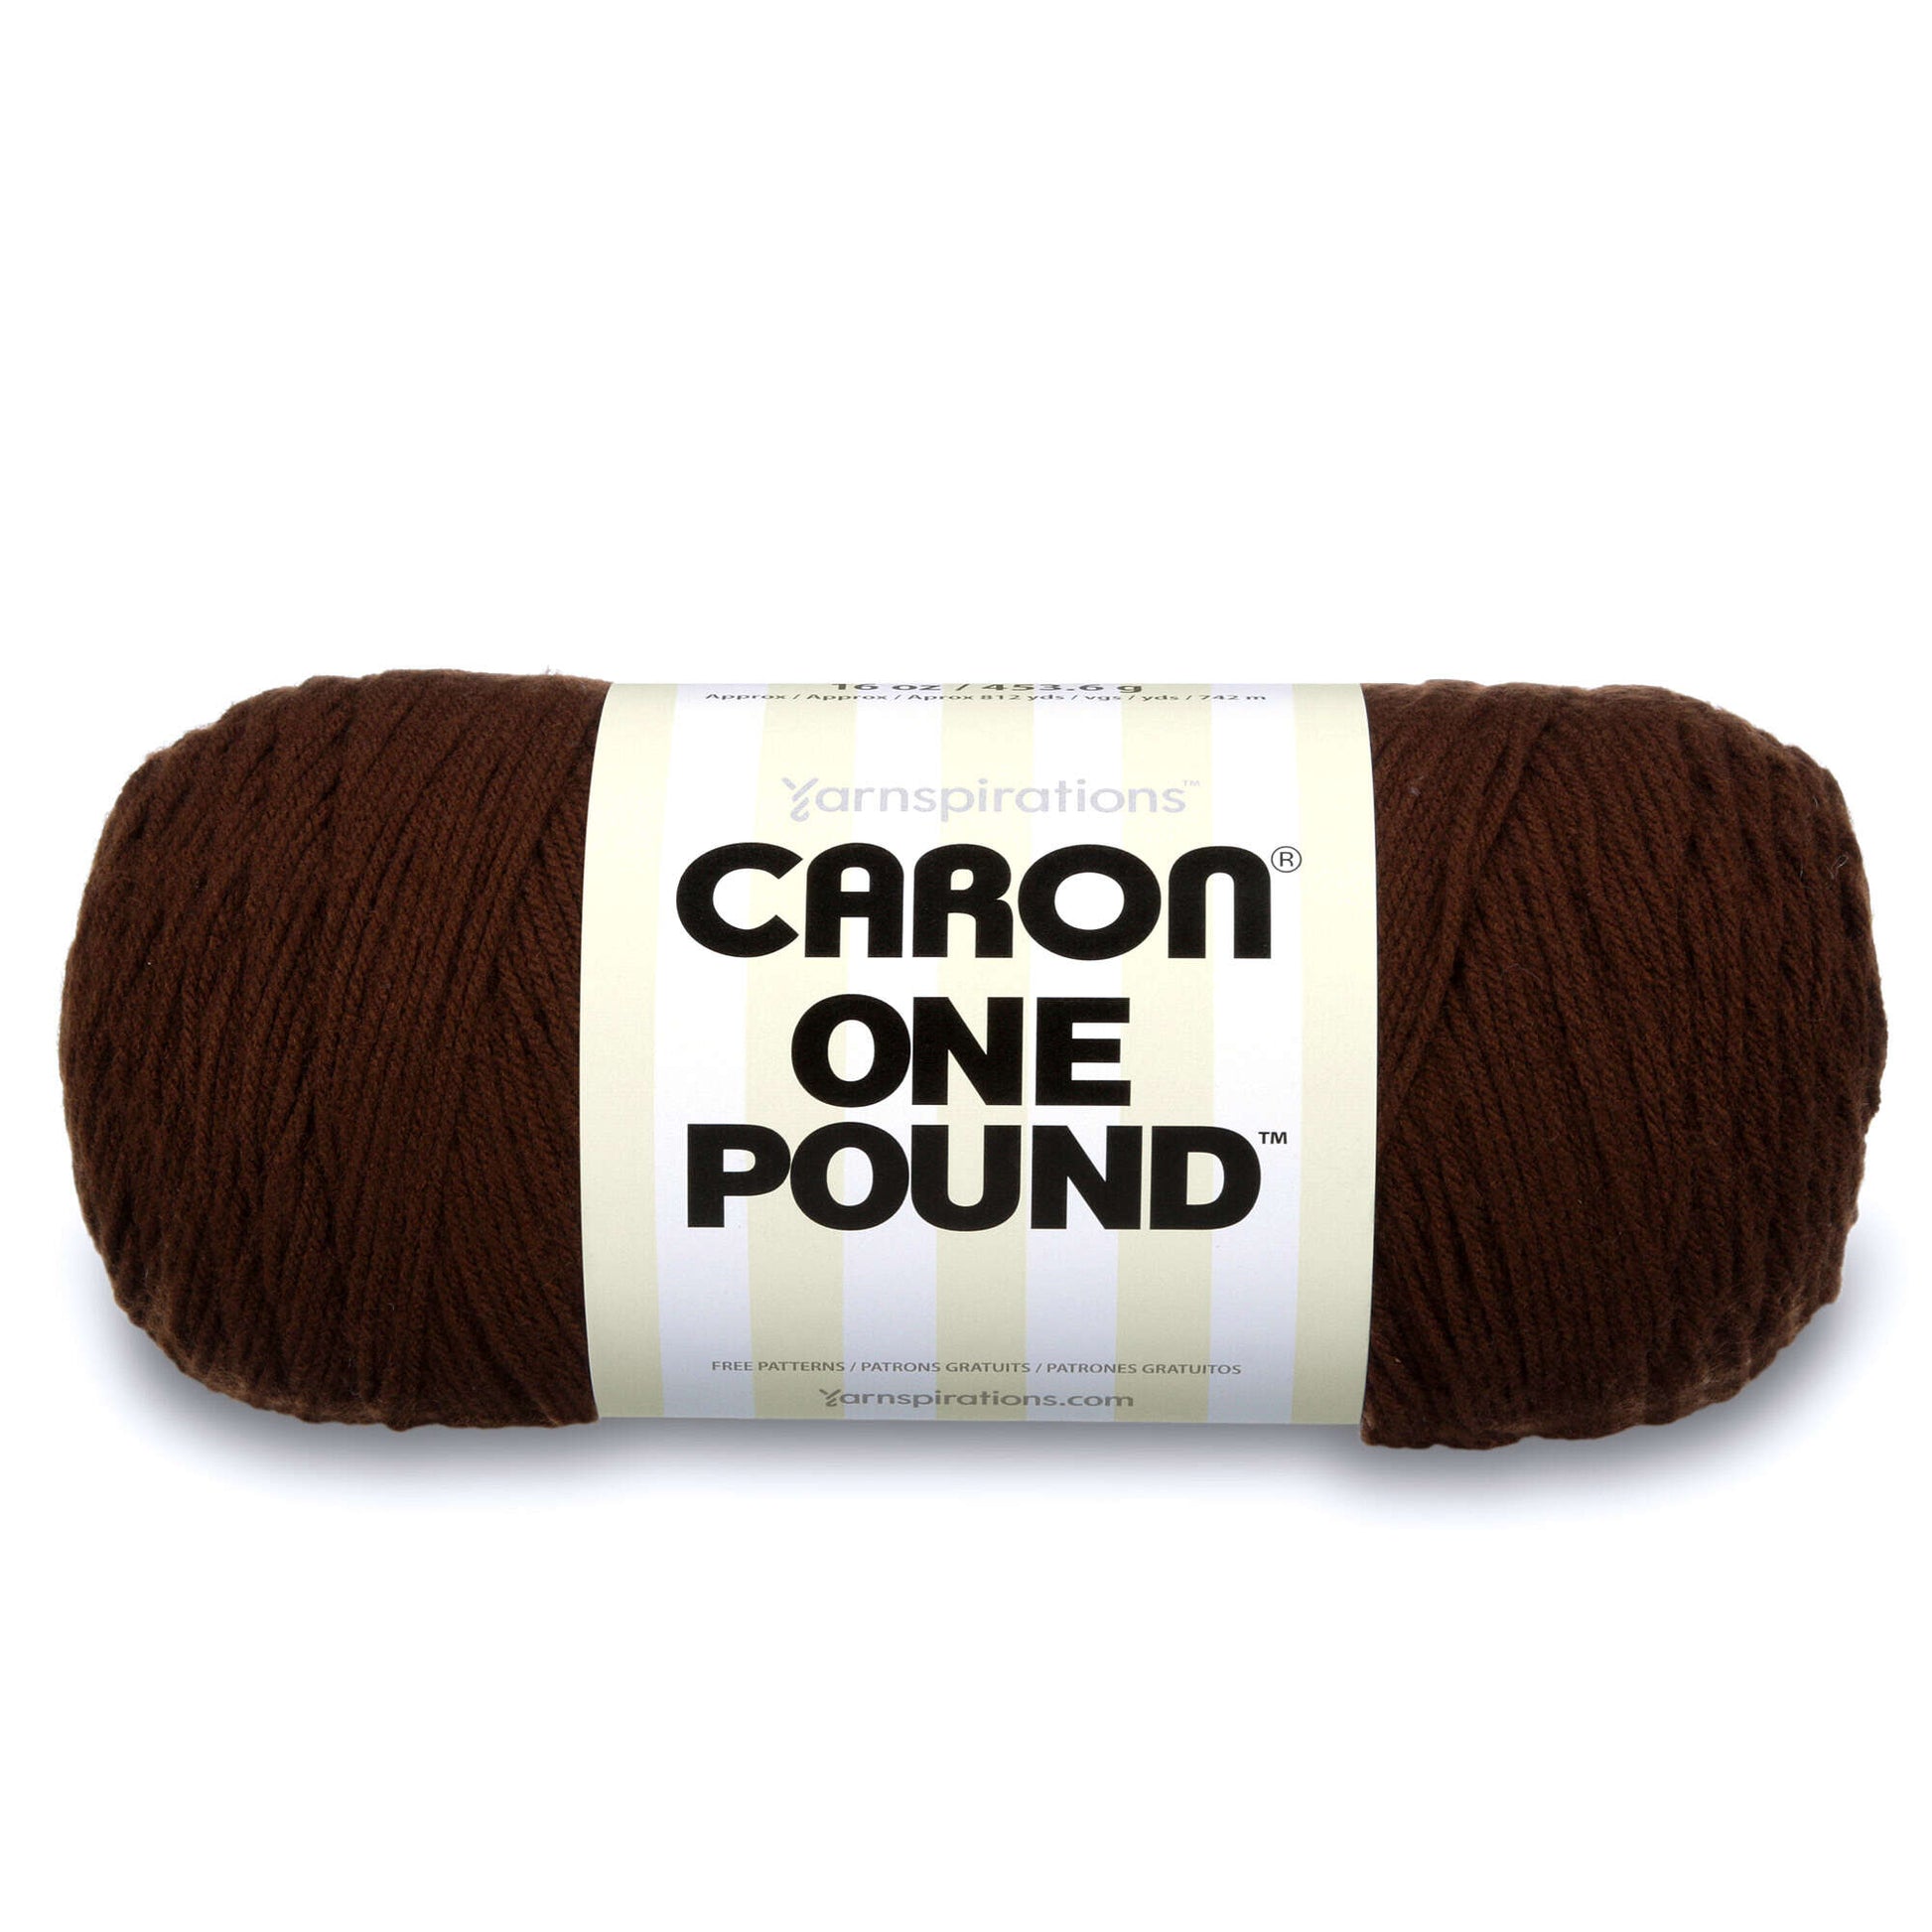 1 Skein Caron One Pound Yarn Espresso Brown - Tony's Restaurant in Alton, IL